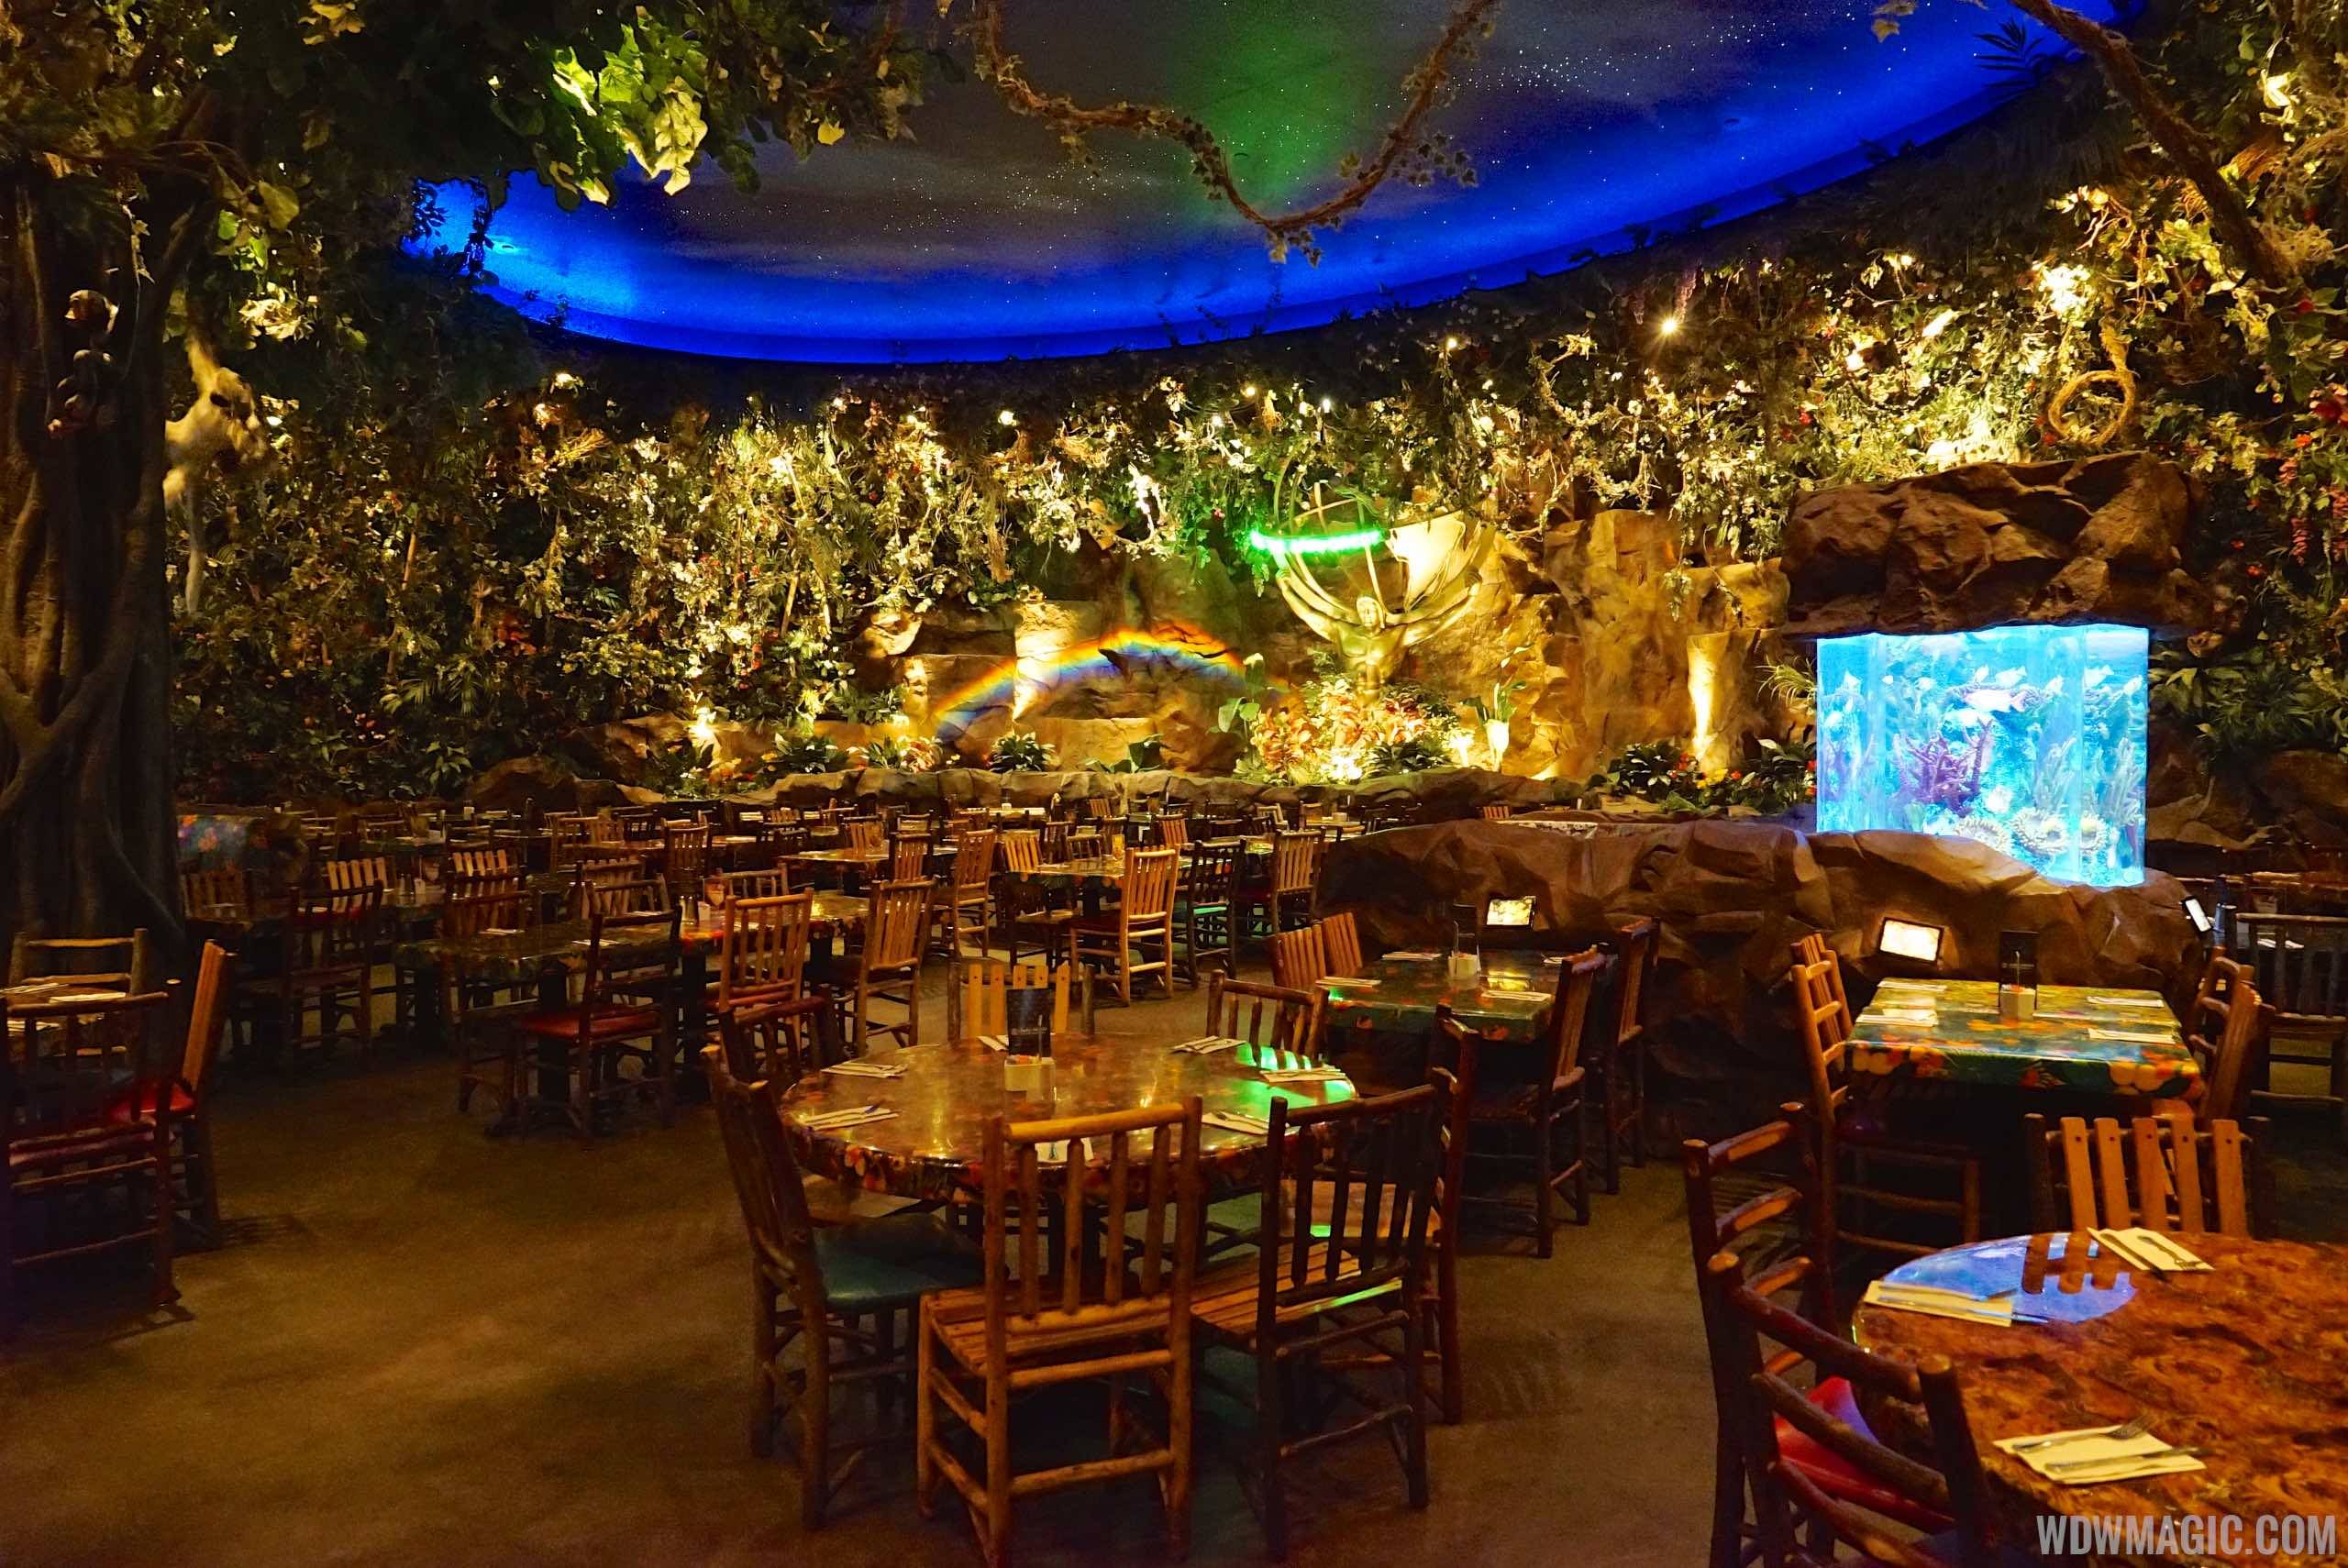 Rainforest Cafe Disney's Animal Kingdom